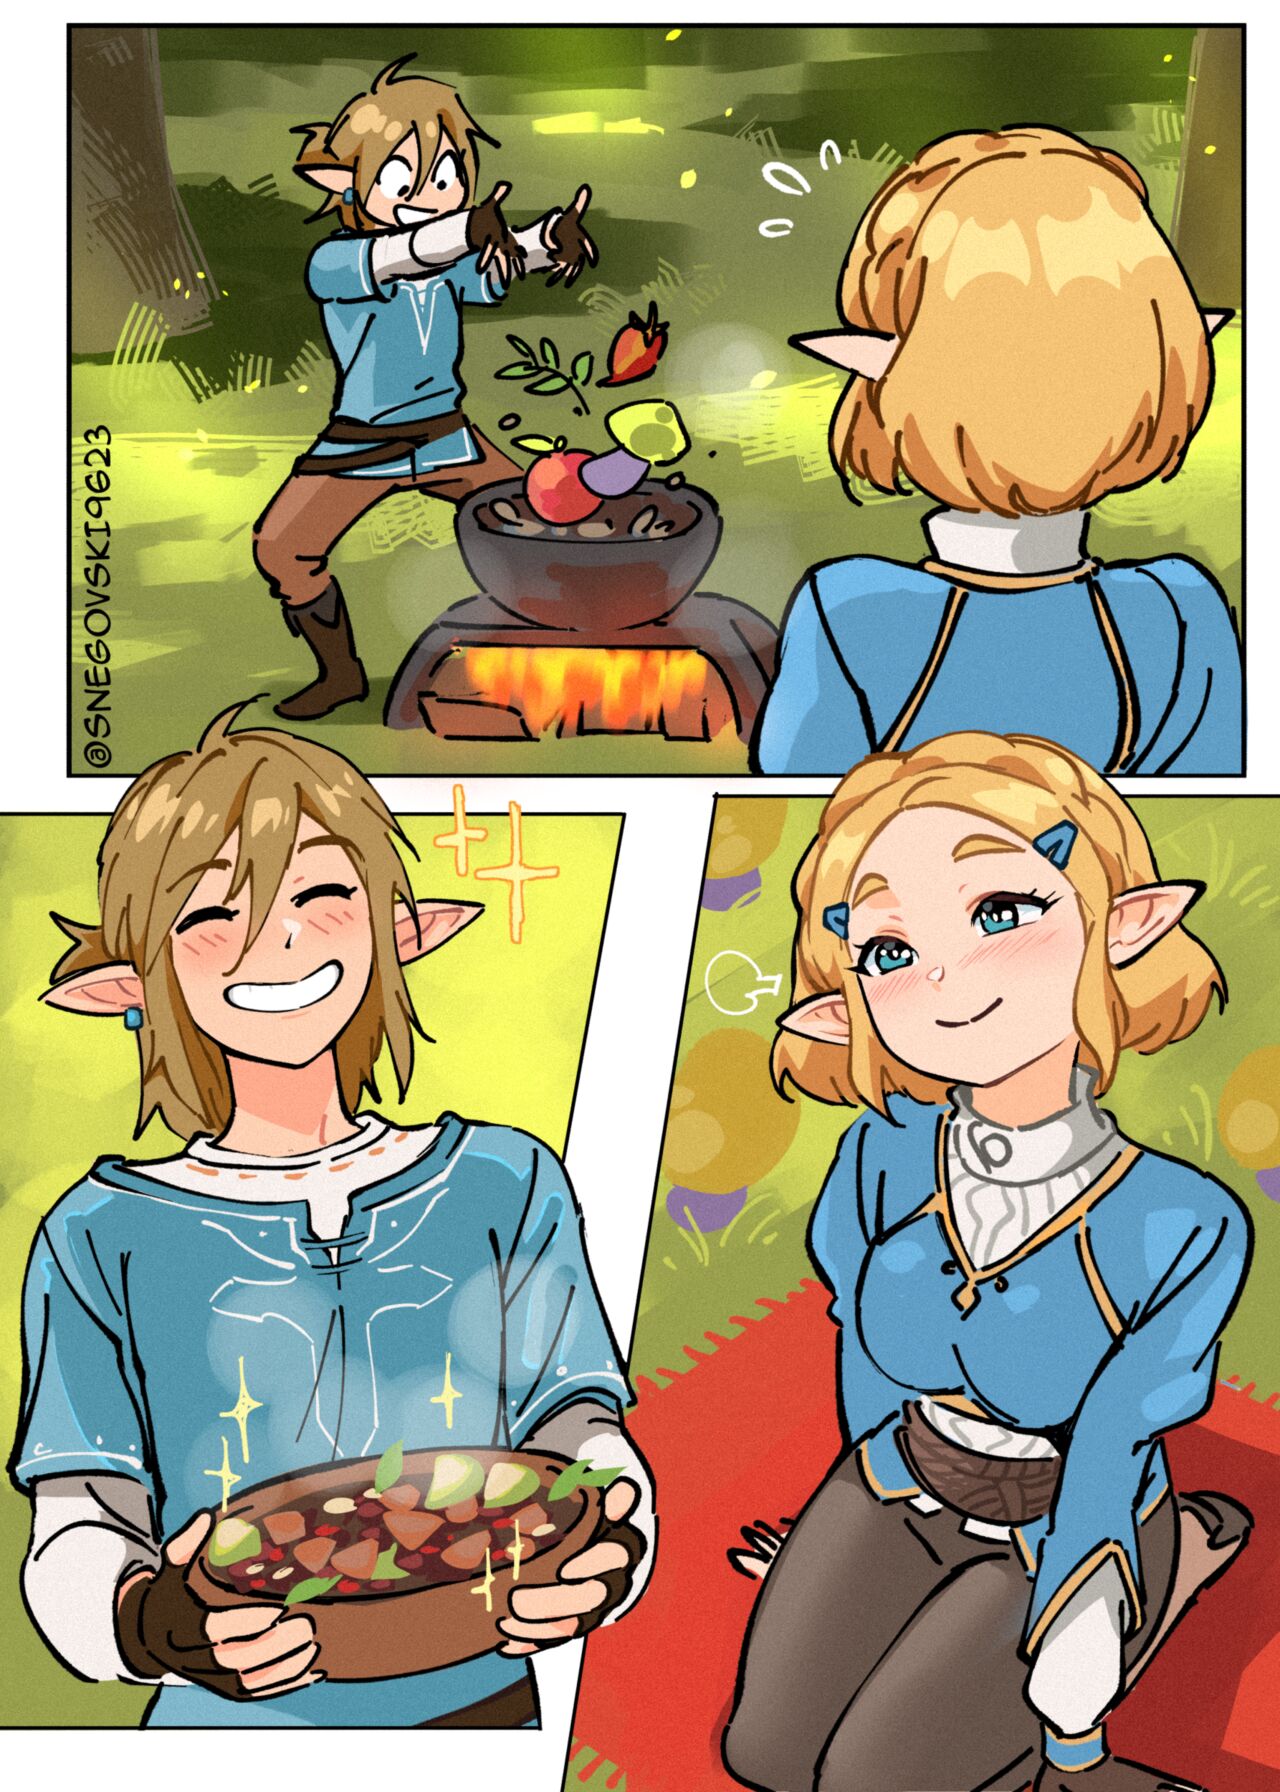 Zelda Cartoon Porn - Zelda and Link Summer Vibes Porn Comics by [Snegovski] (The Legend Of Zelda)  Rule 34 Comics â€“ R34Porn